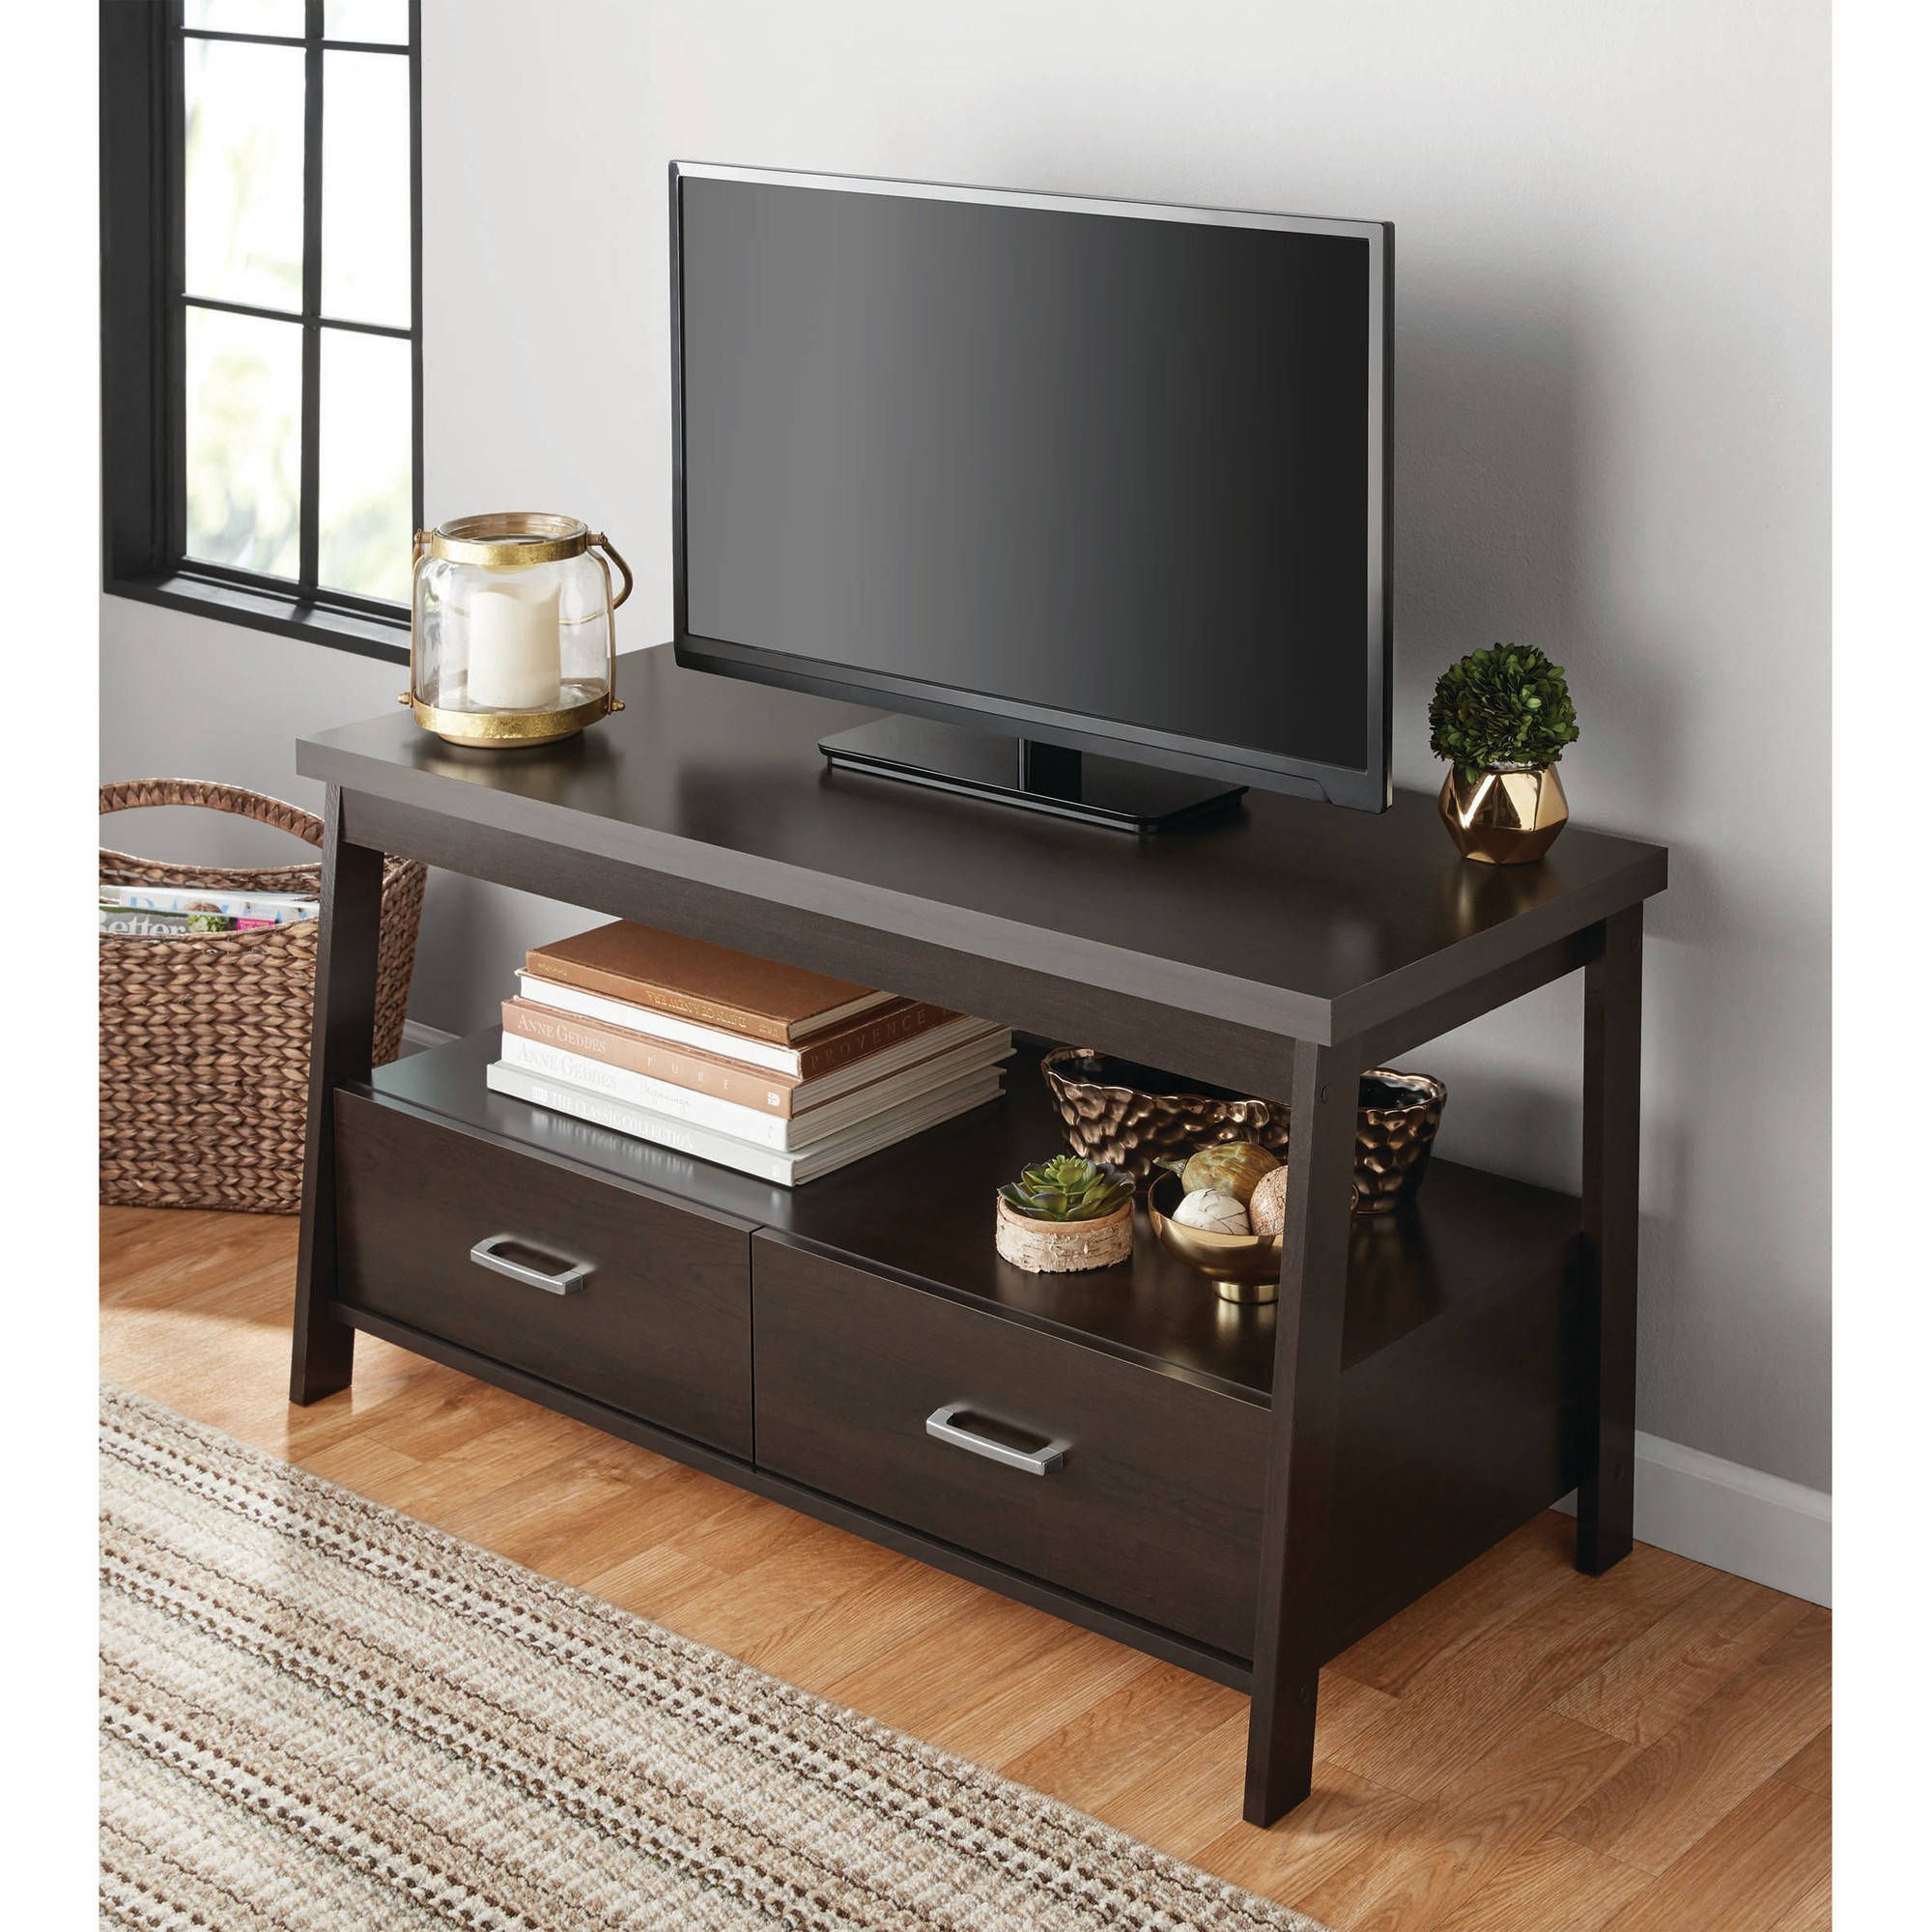 Mainstays Logan Tv Stand For Tvs Up To 47", Espresso Regarding Alden Design Wooden Tv Stands With Storage Cabinet Espresso (Photo 3 of 15)